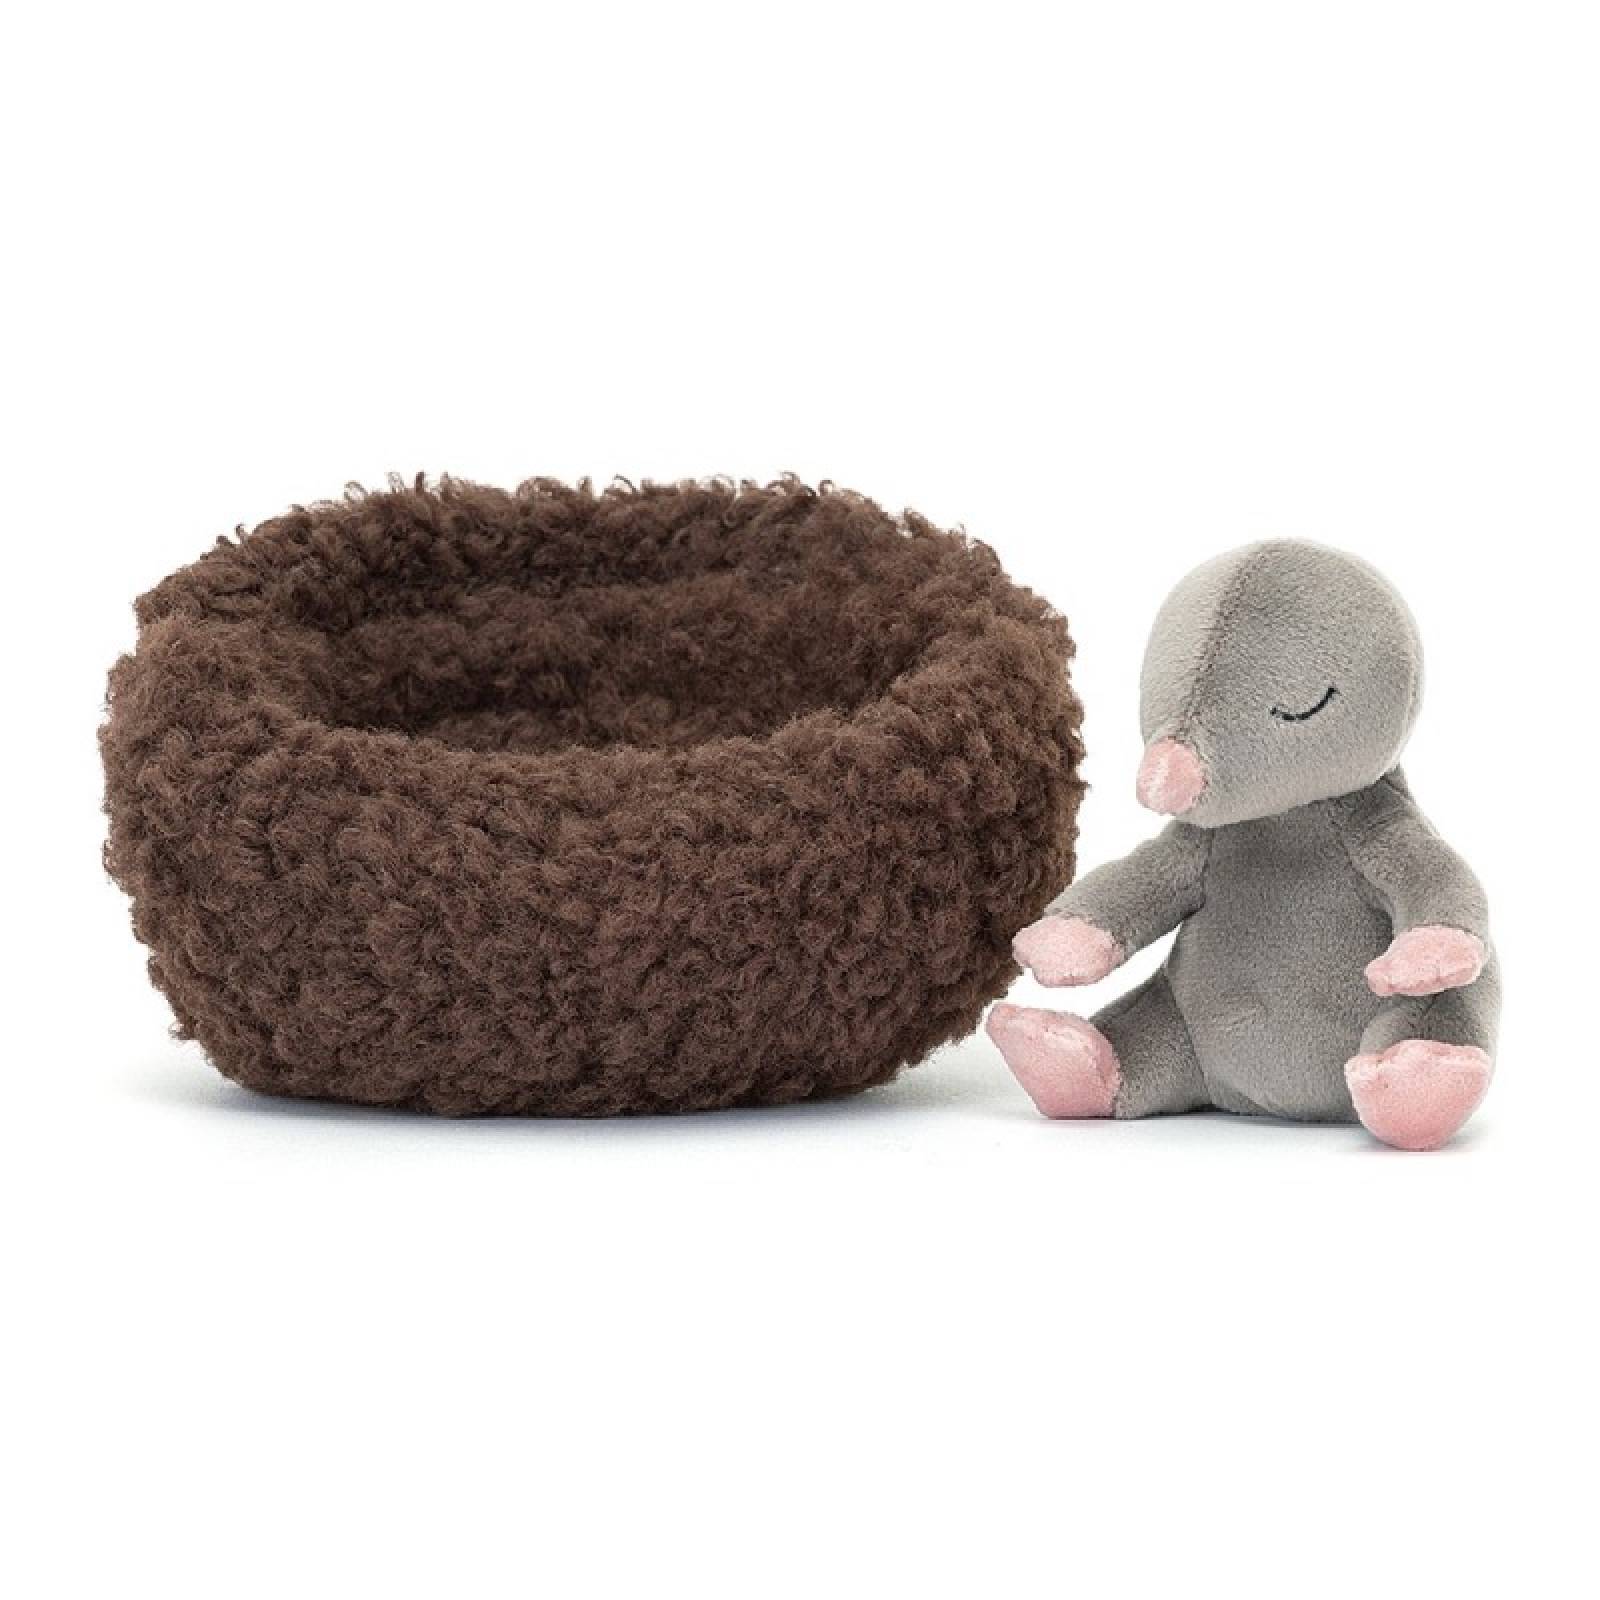 Hibernating Mole Soft Toy By Jellycat 0+ thumbnails